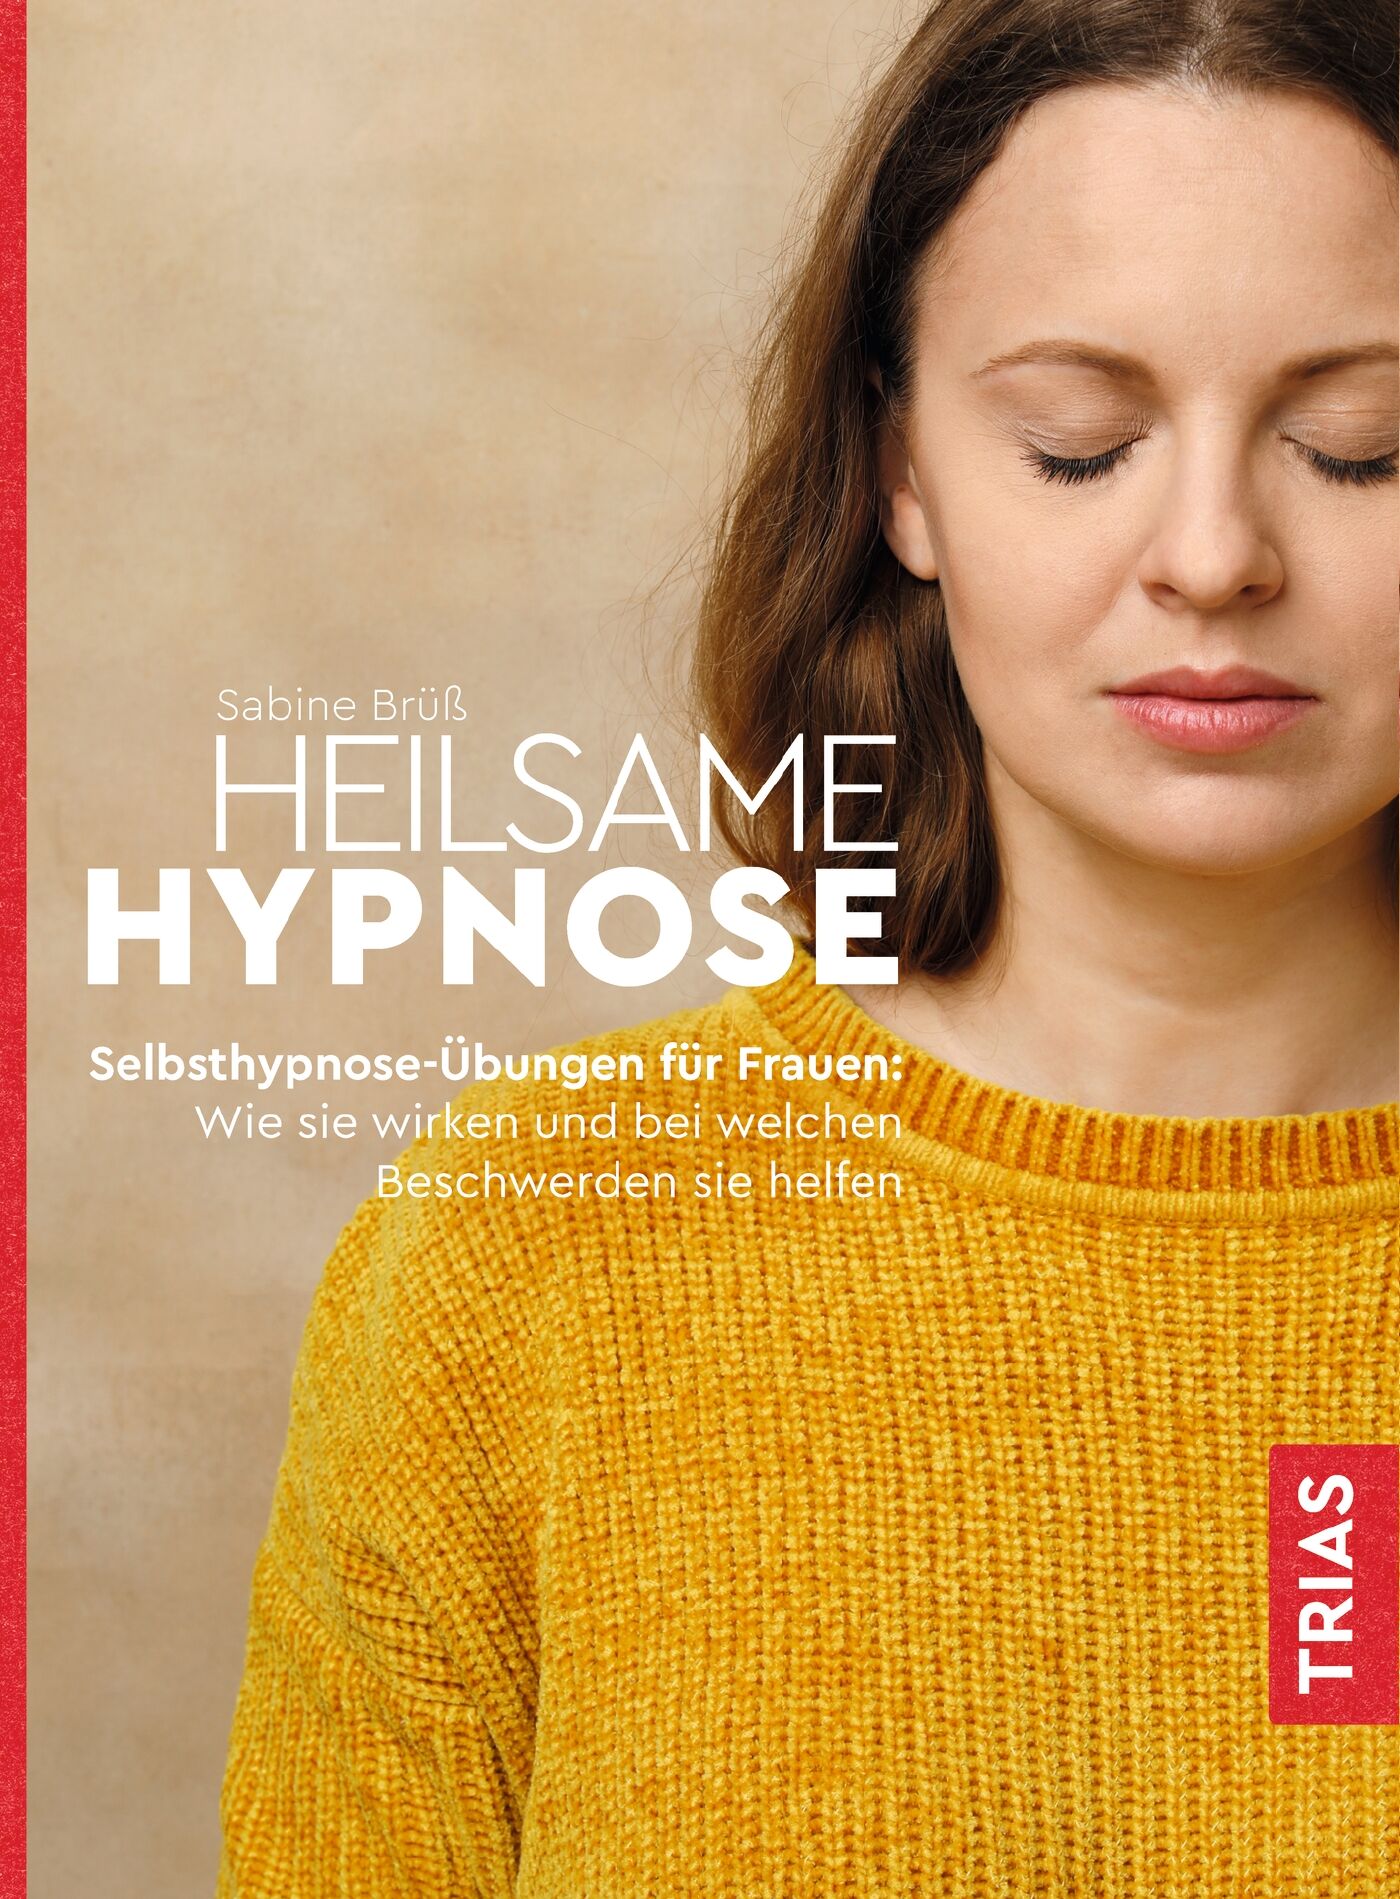 Heilsame Hypnose, 9783432114118